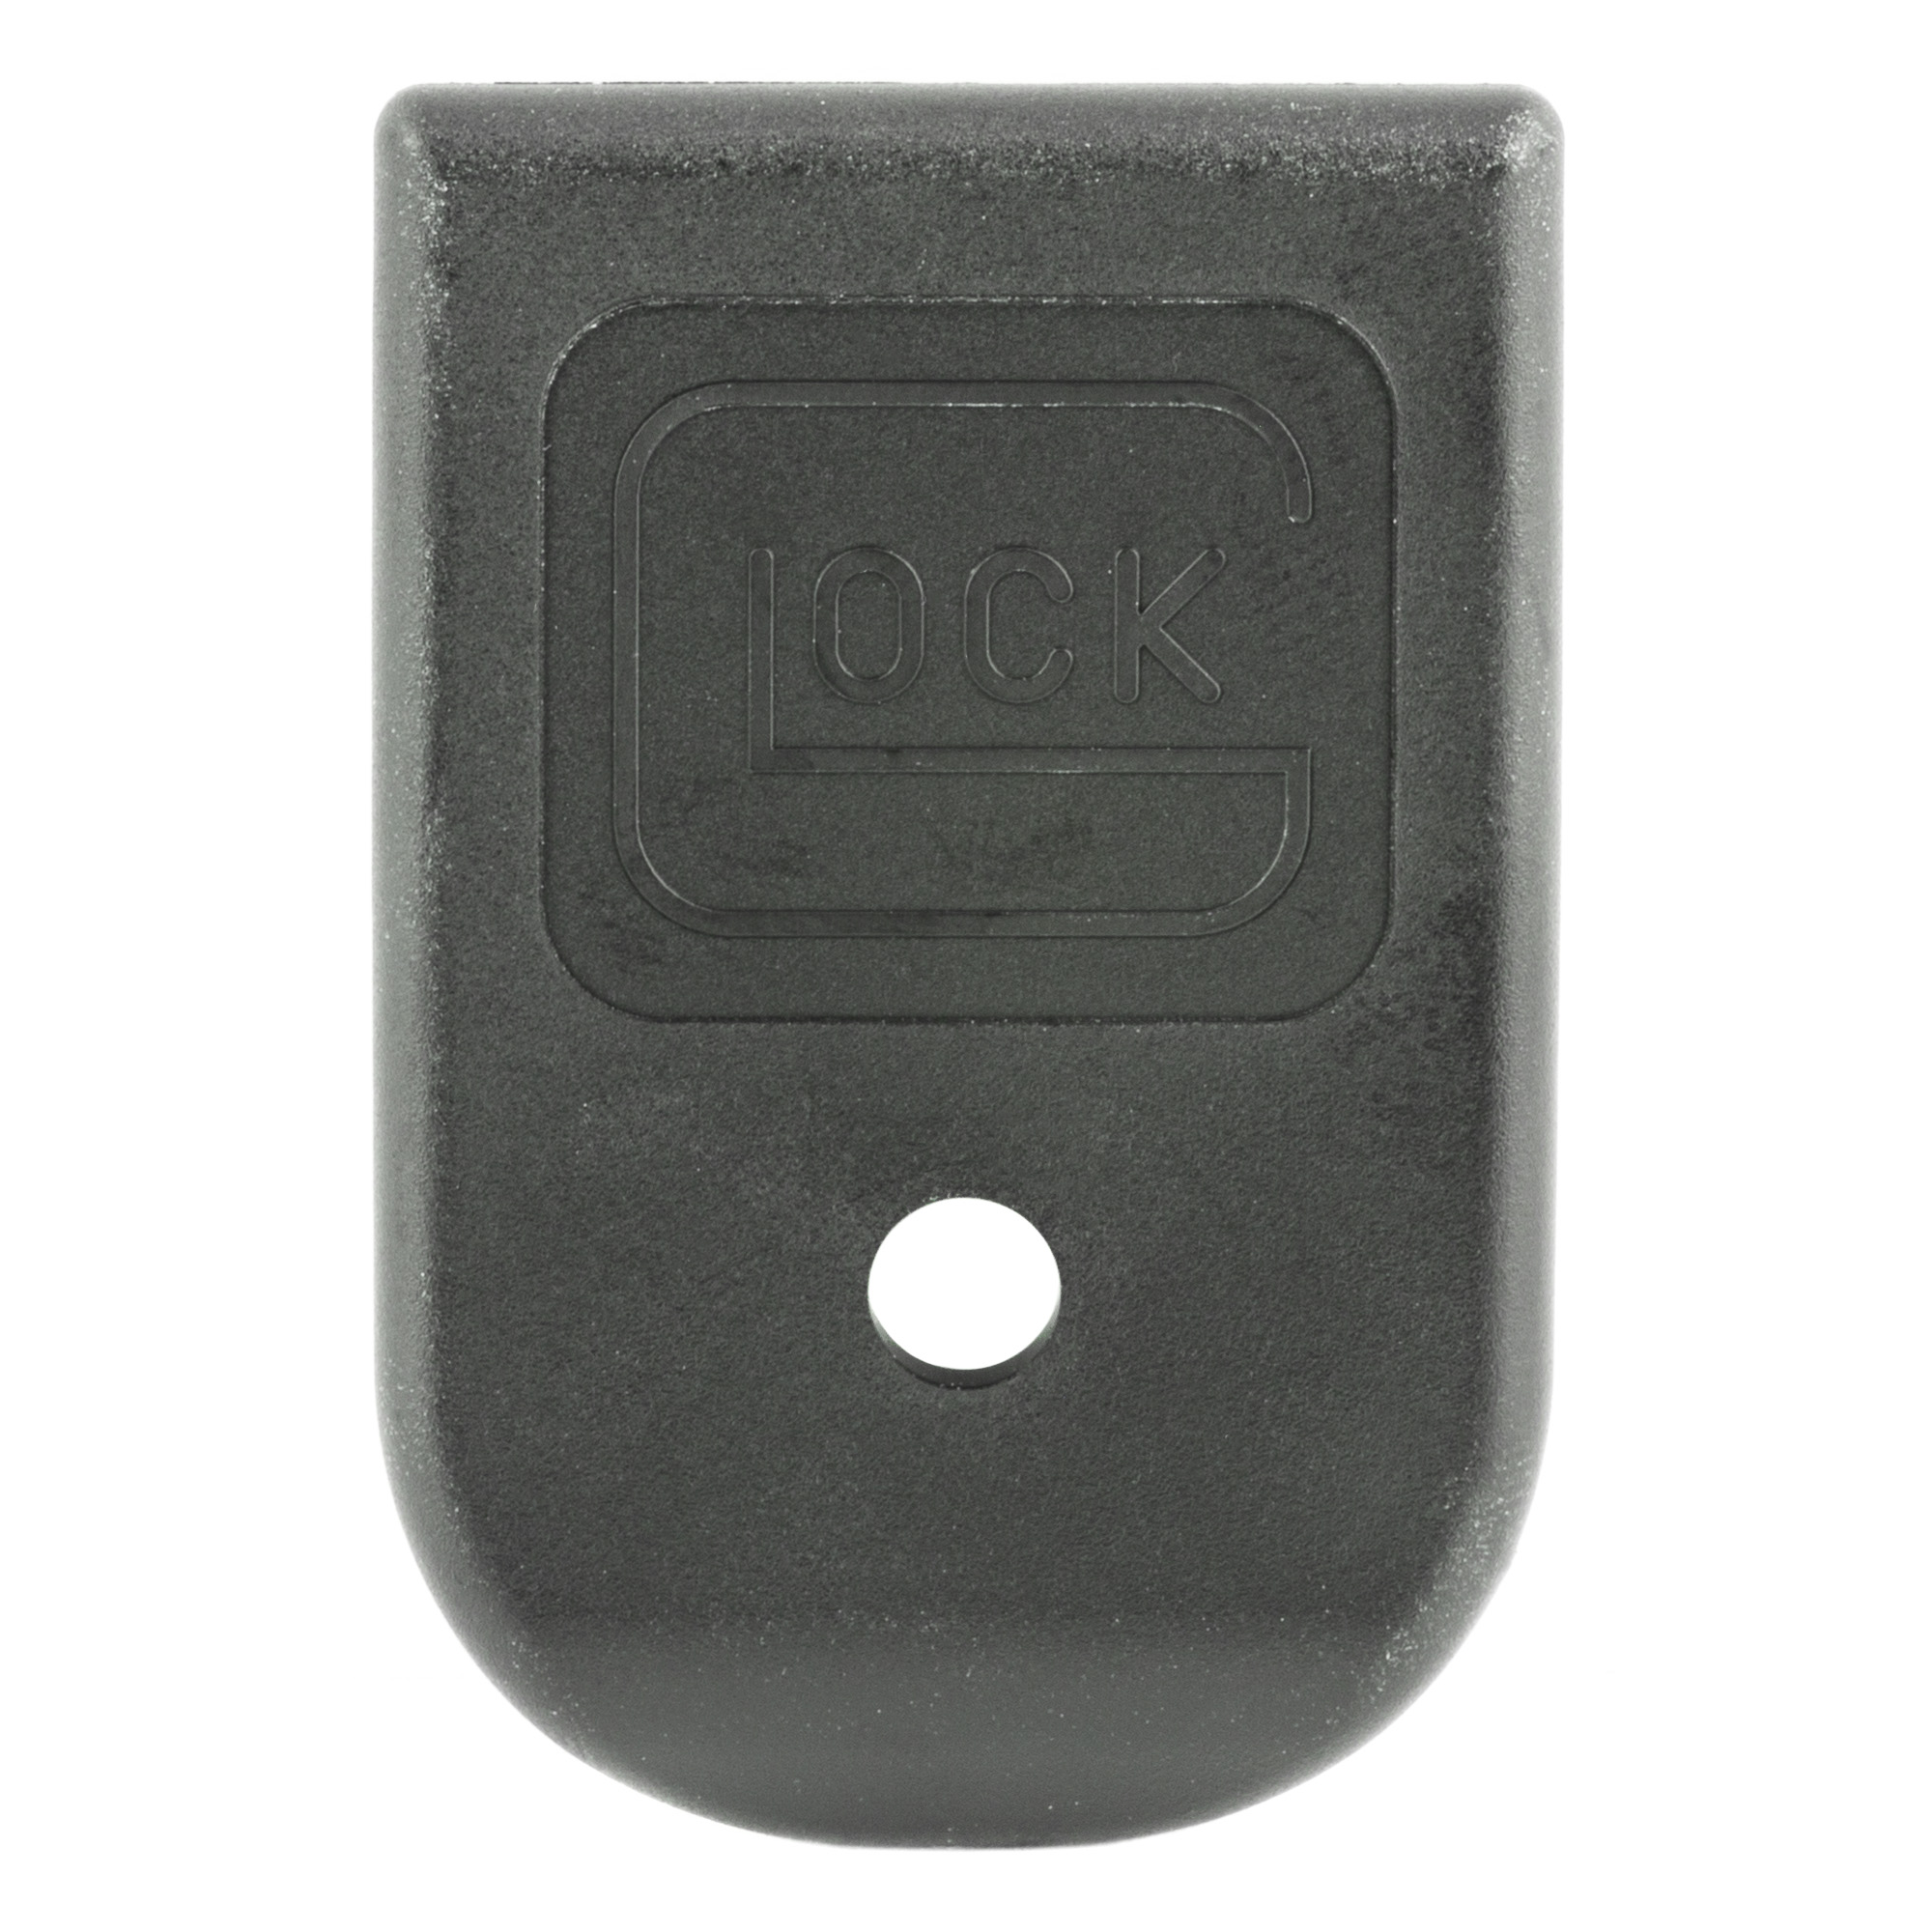 Glock Baseplate for Glock 9mm G17/19 GEN5 Magazines